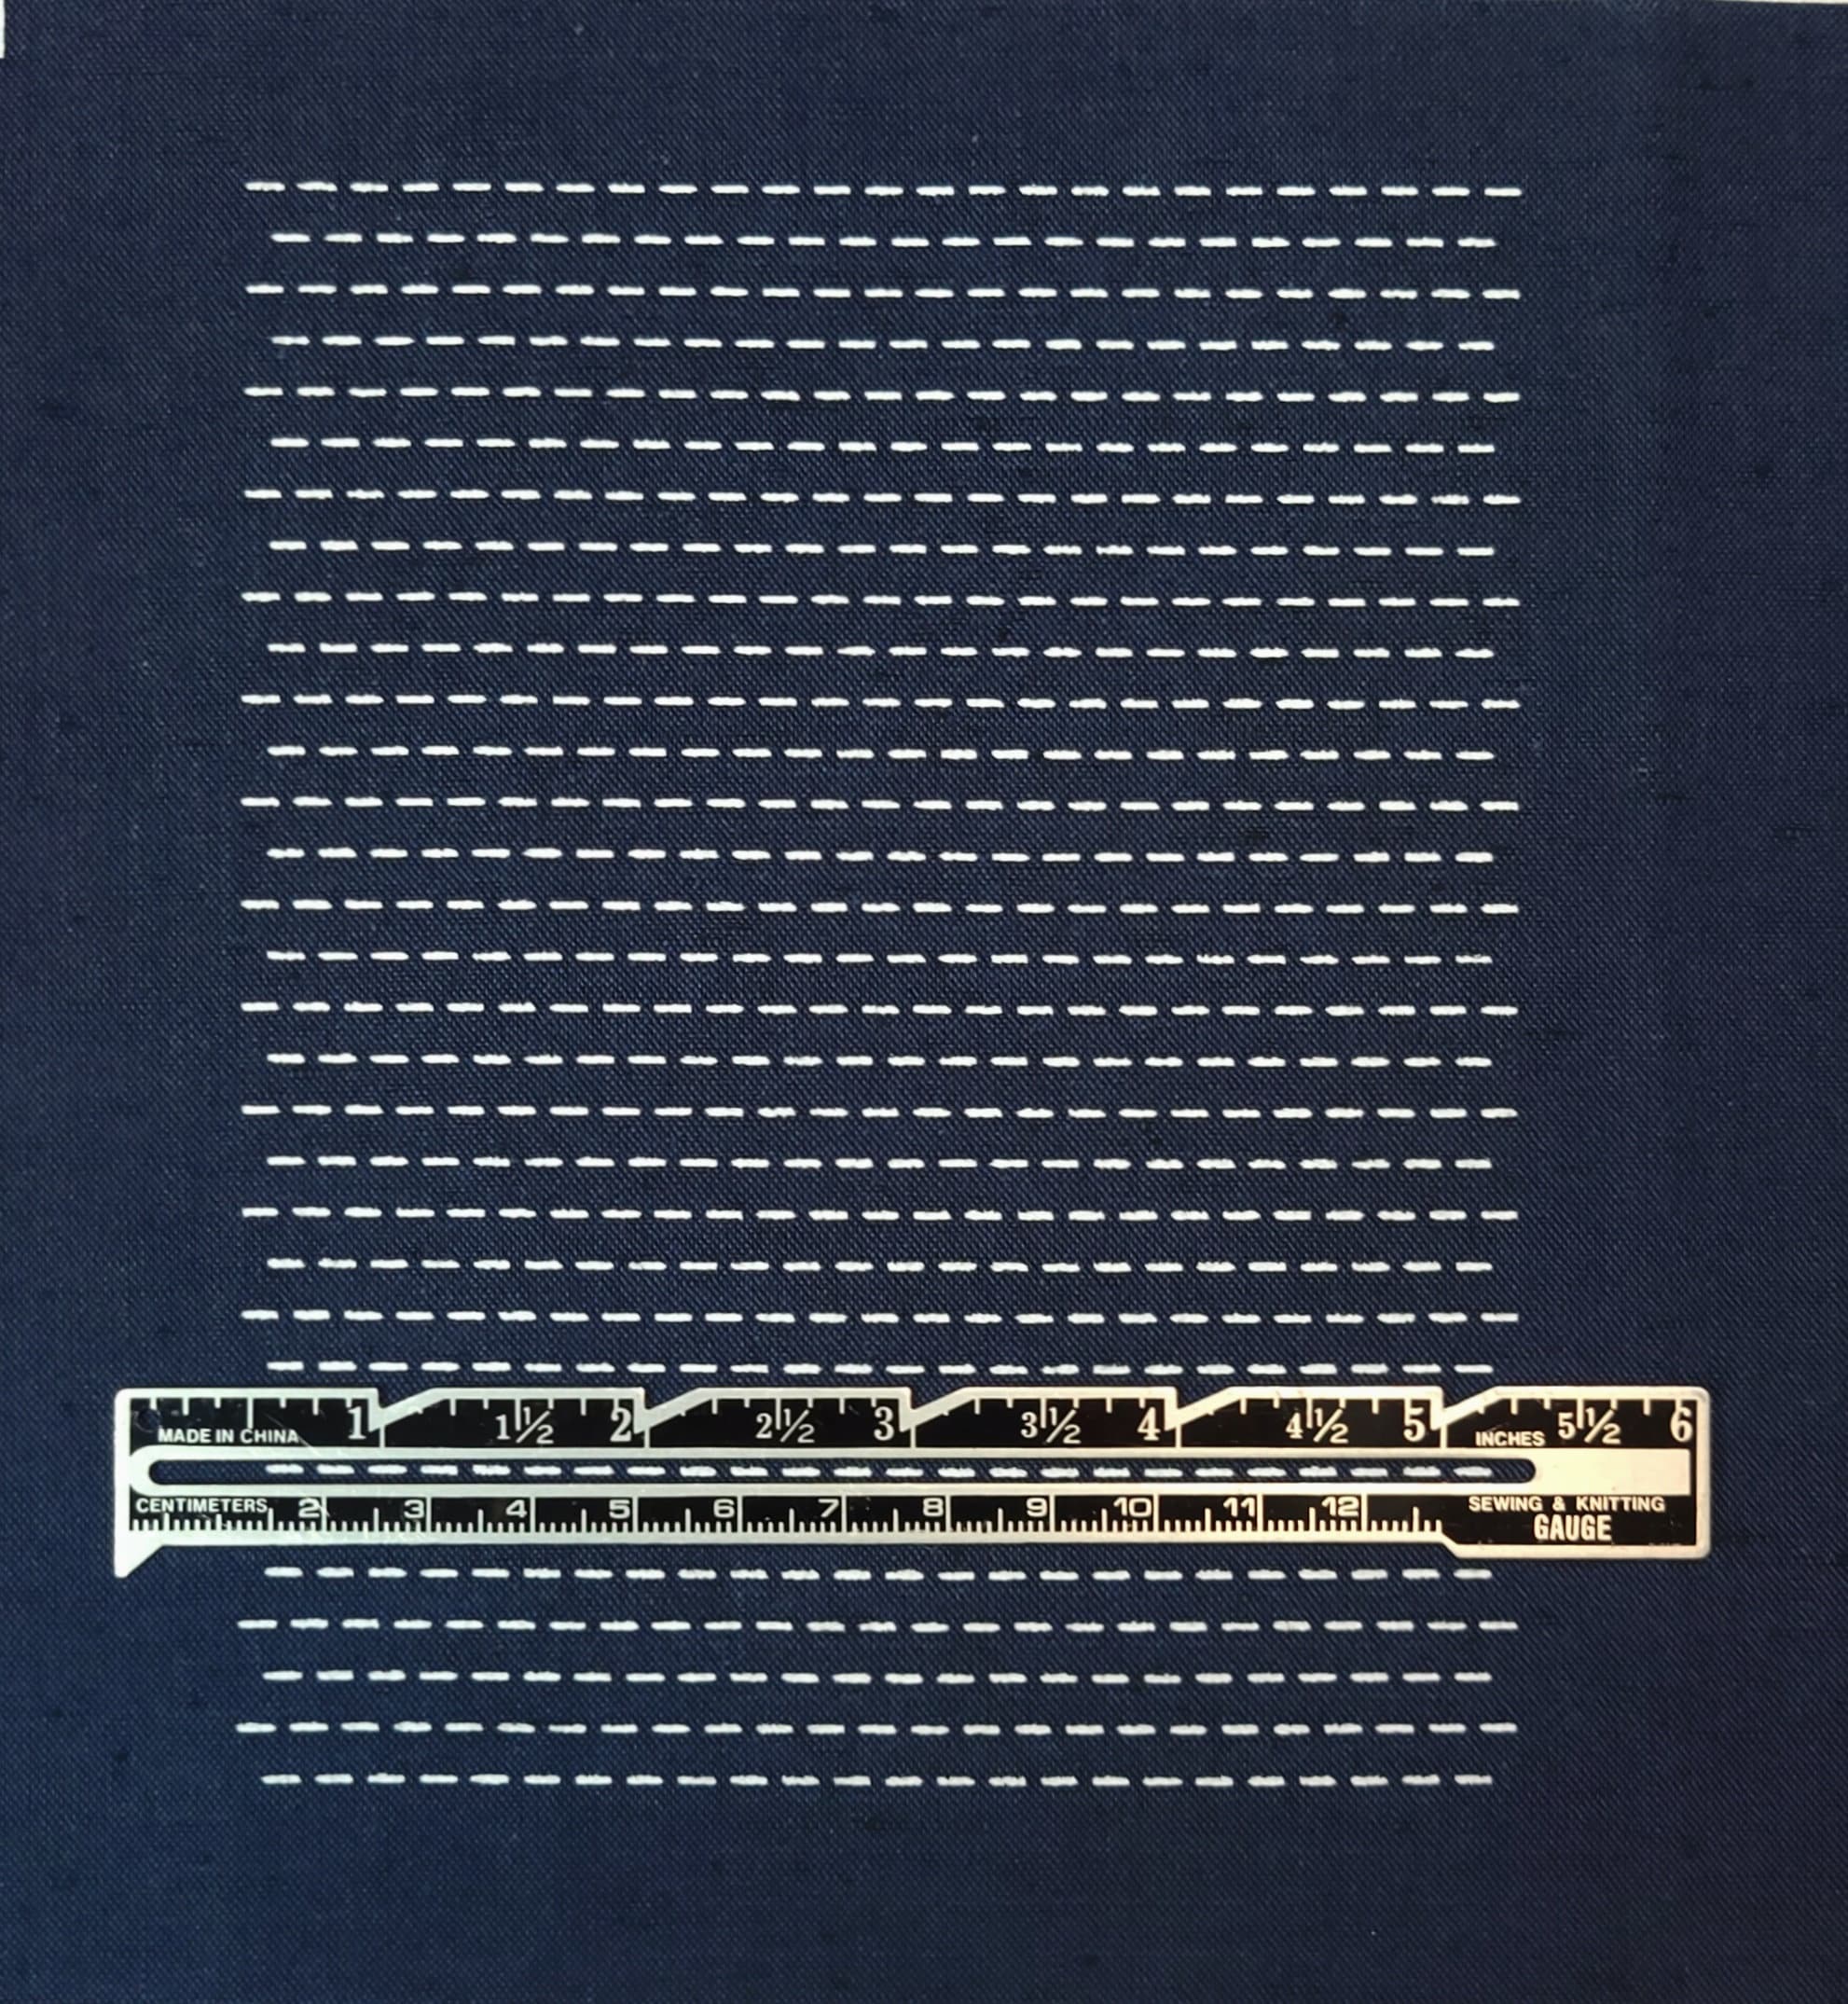 Mending Kit with 52 Sashiko Patterns - A Threaded Needle